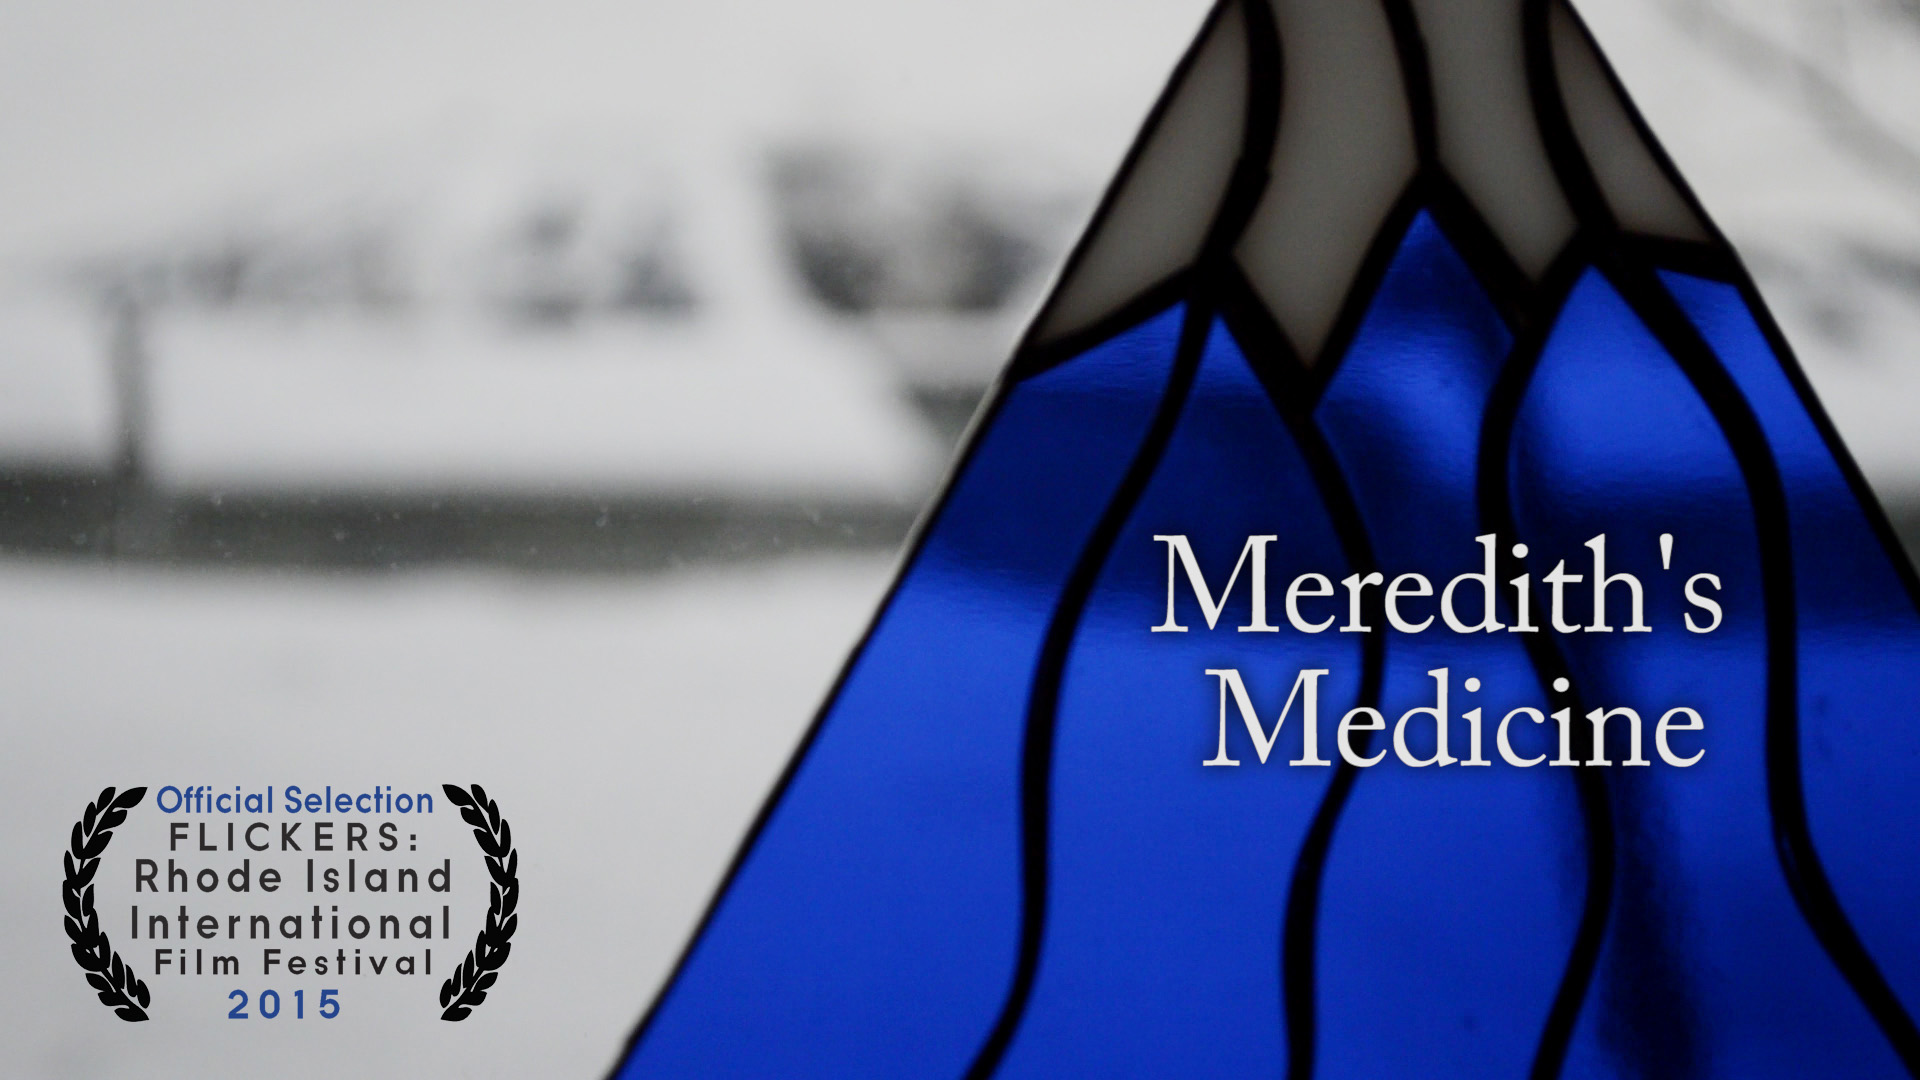 Meredith’s Medicine